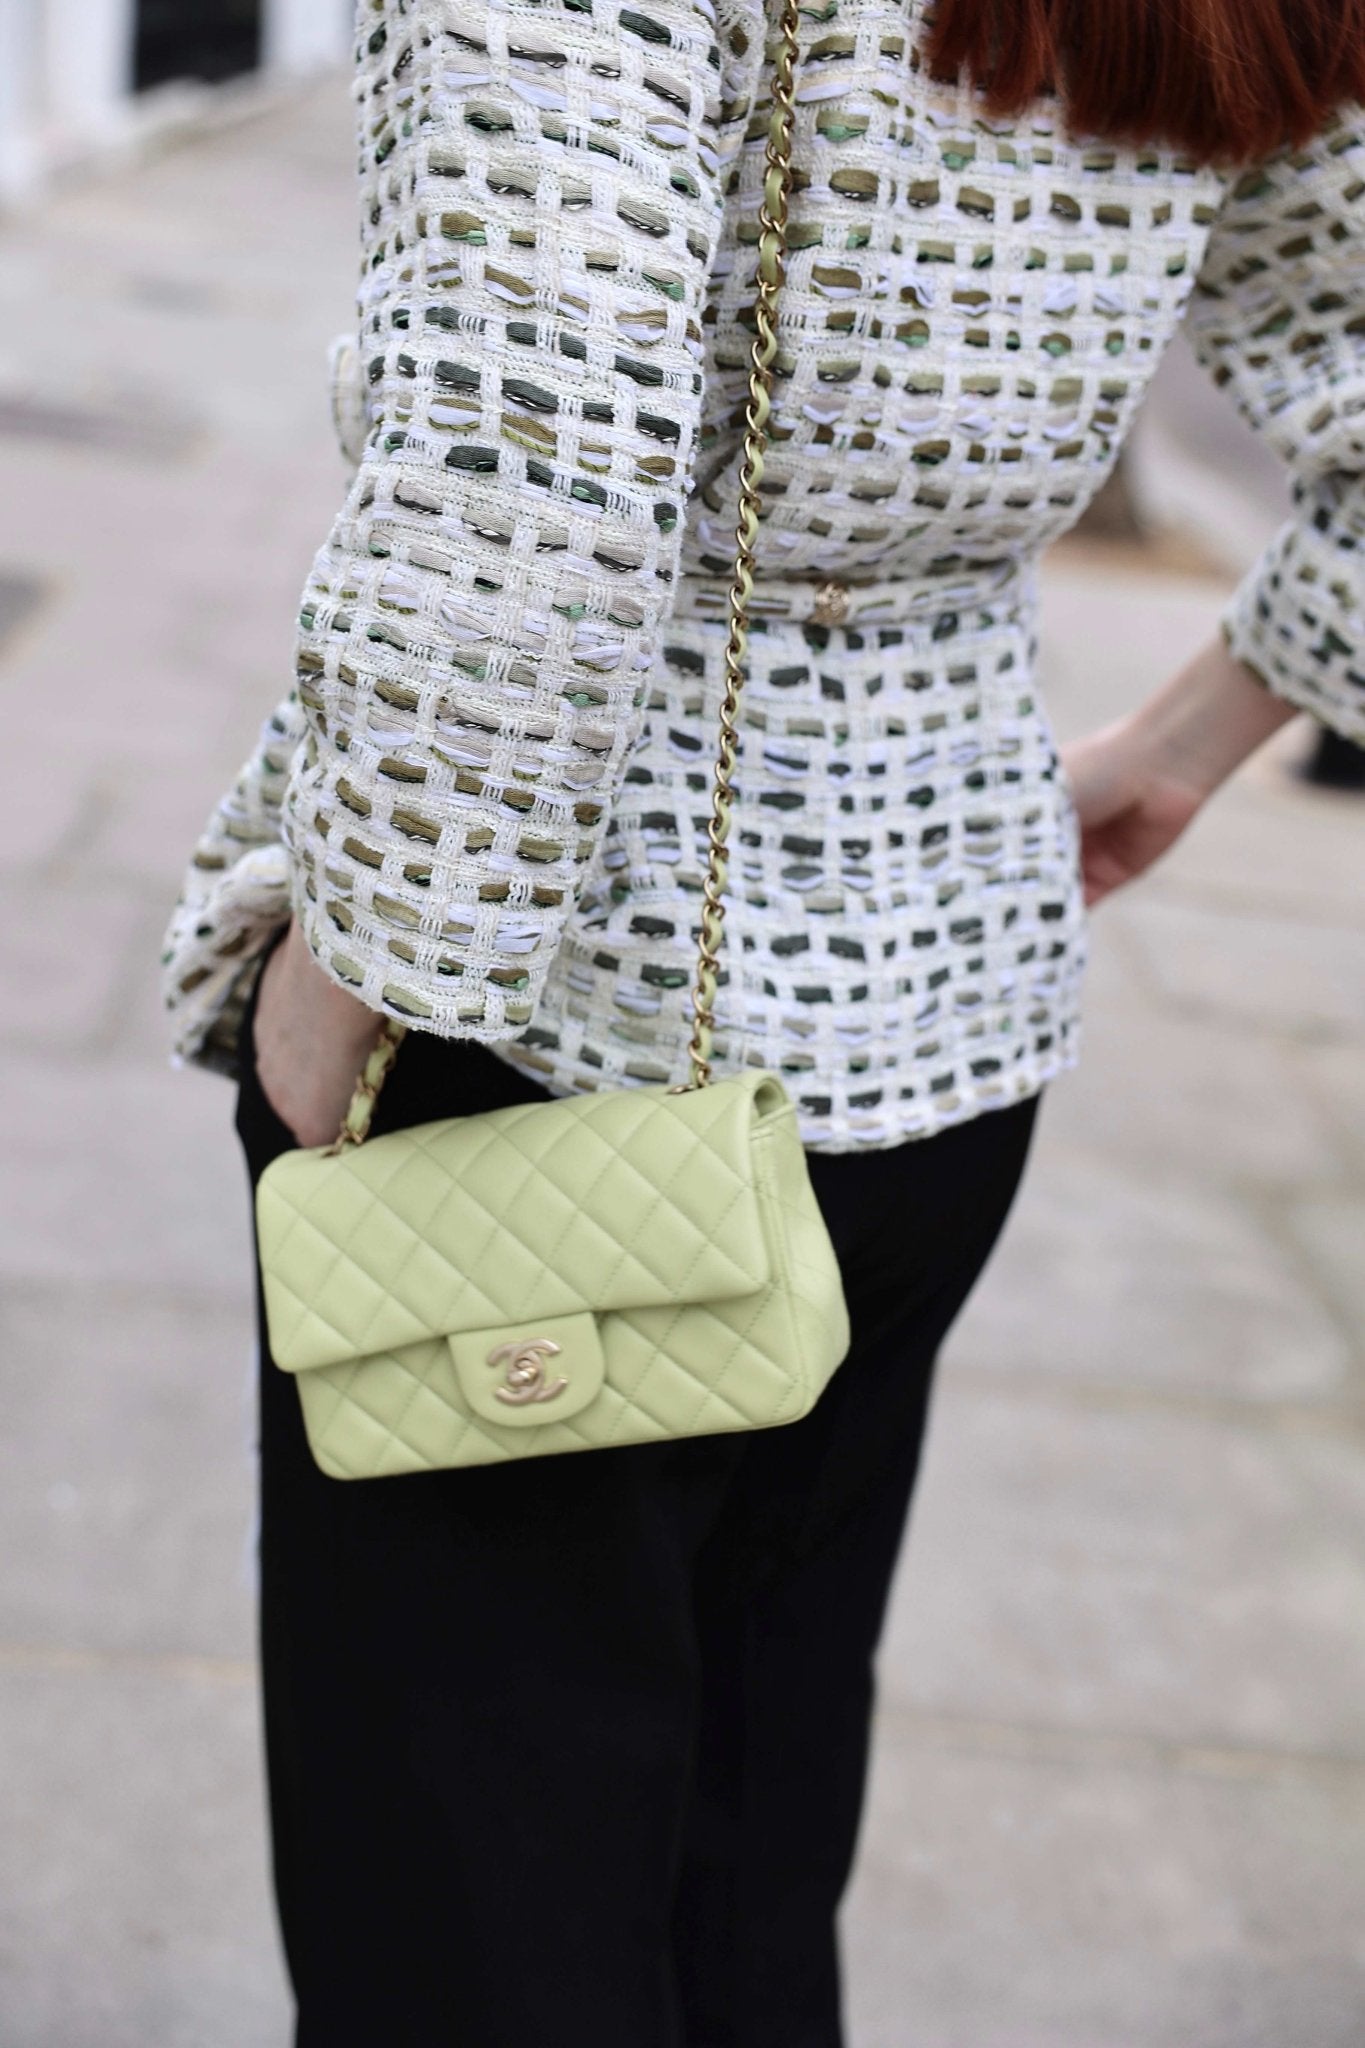 Chanel Mini Rectangular Flap Bag “Pistachio Ice-cream” Colour Lambskin with Champagne Gold Hardware